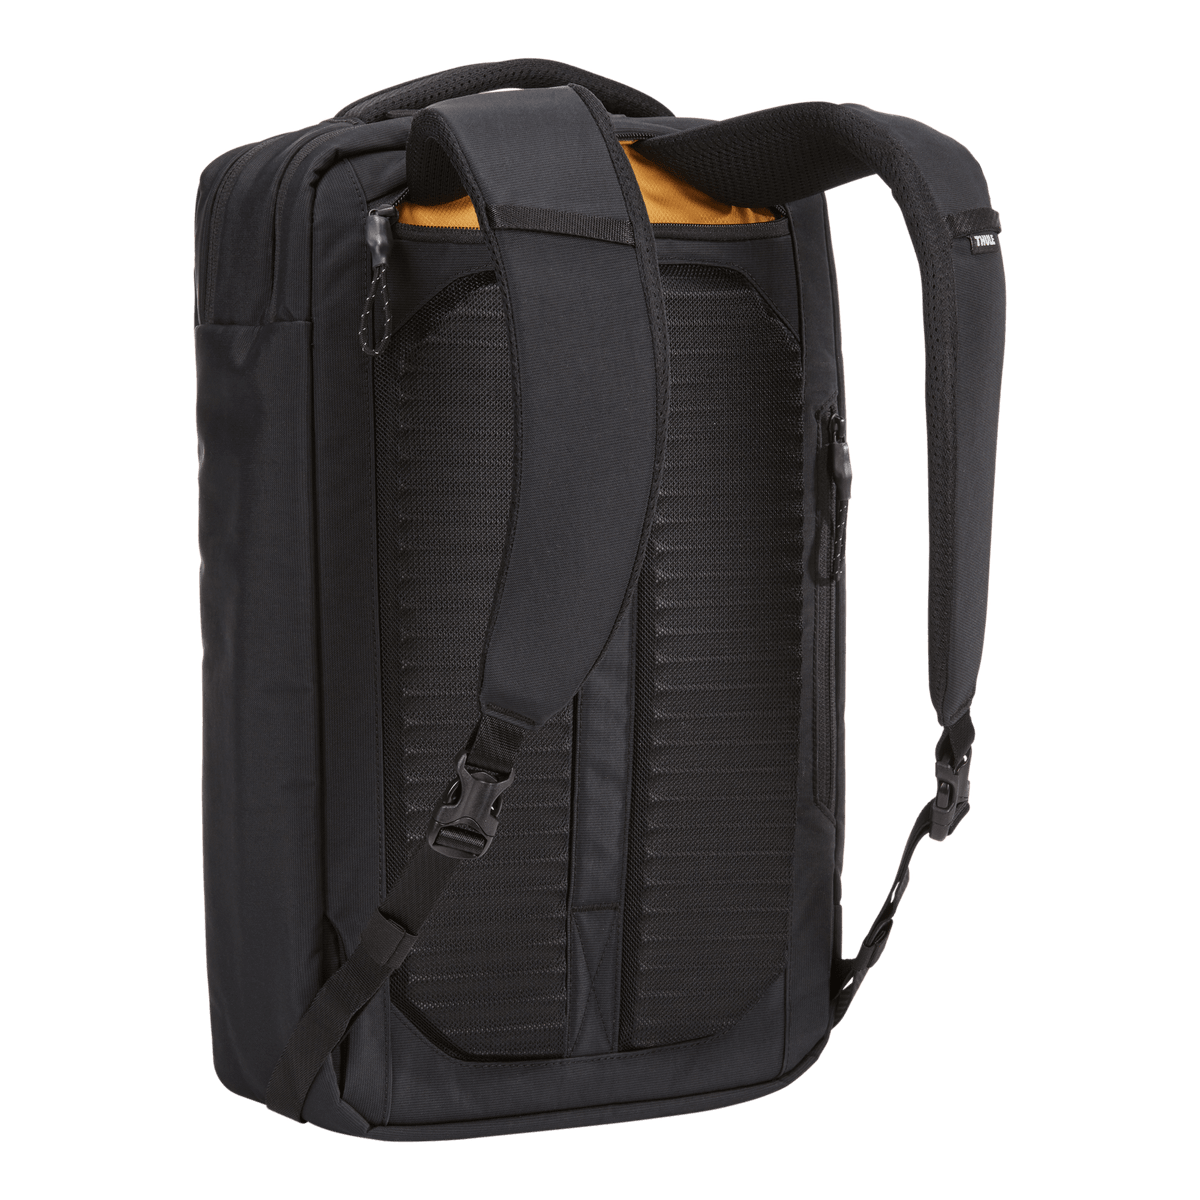 Thule Paramount convertible backpack 16L black